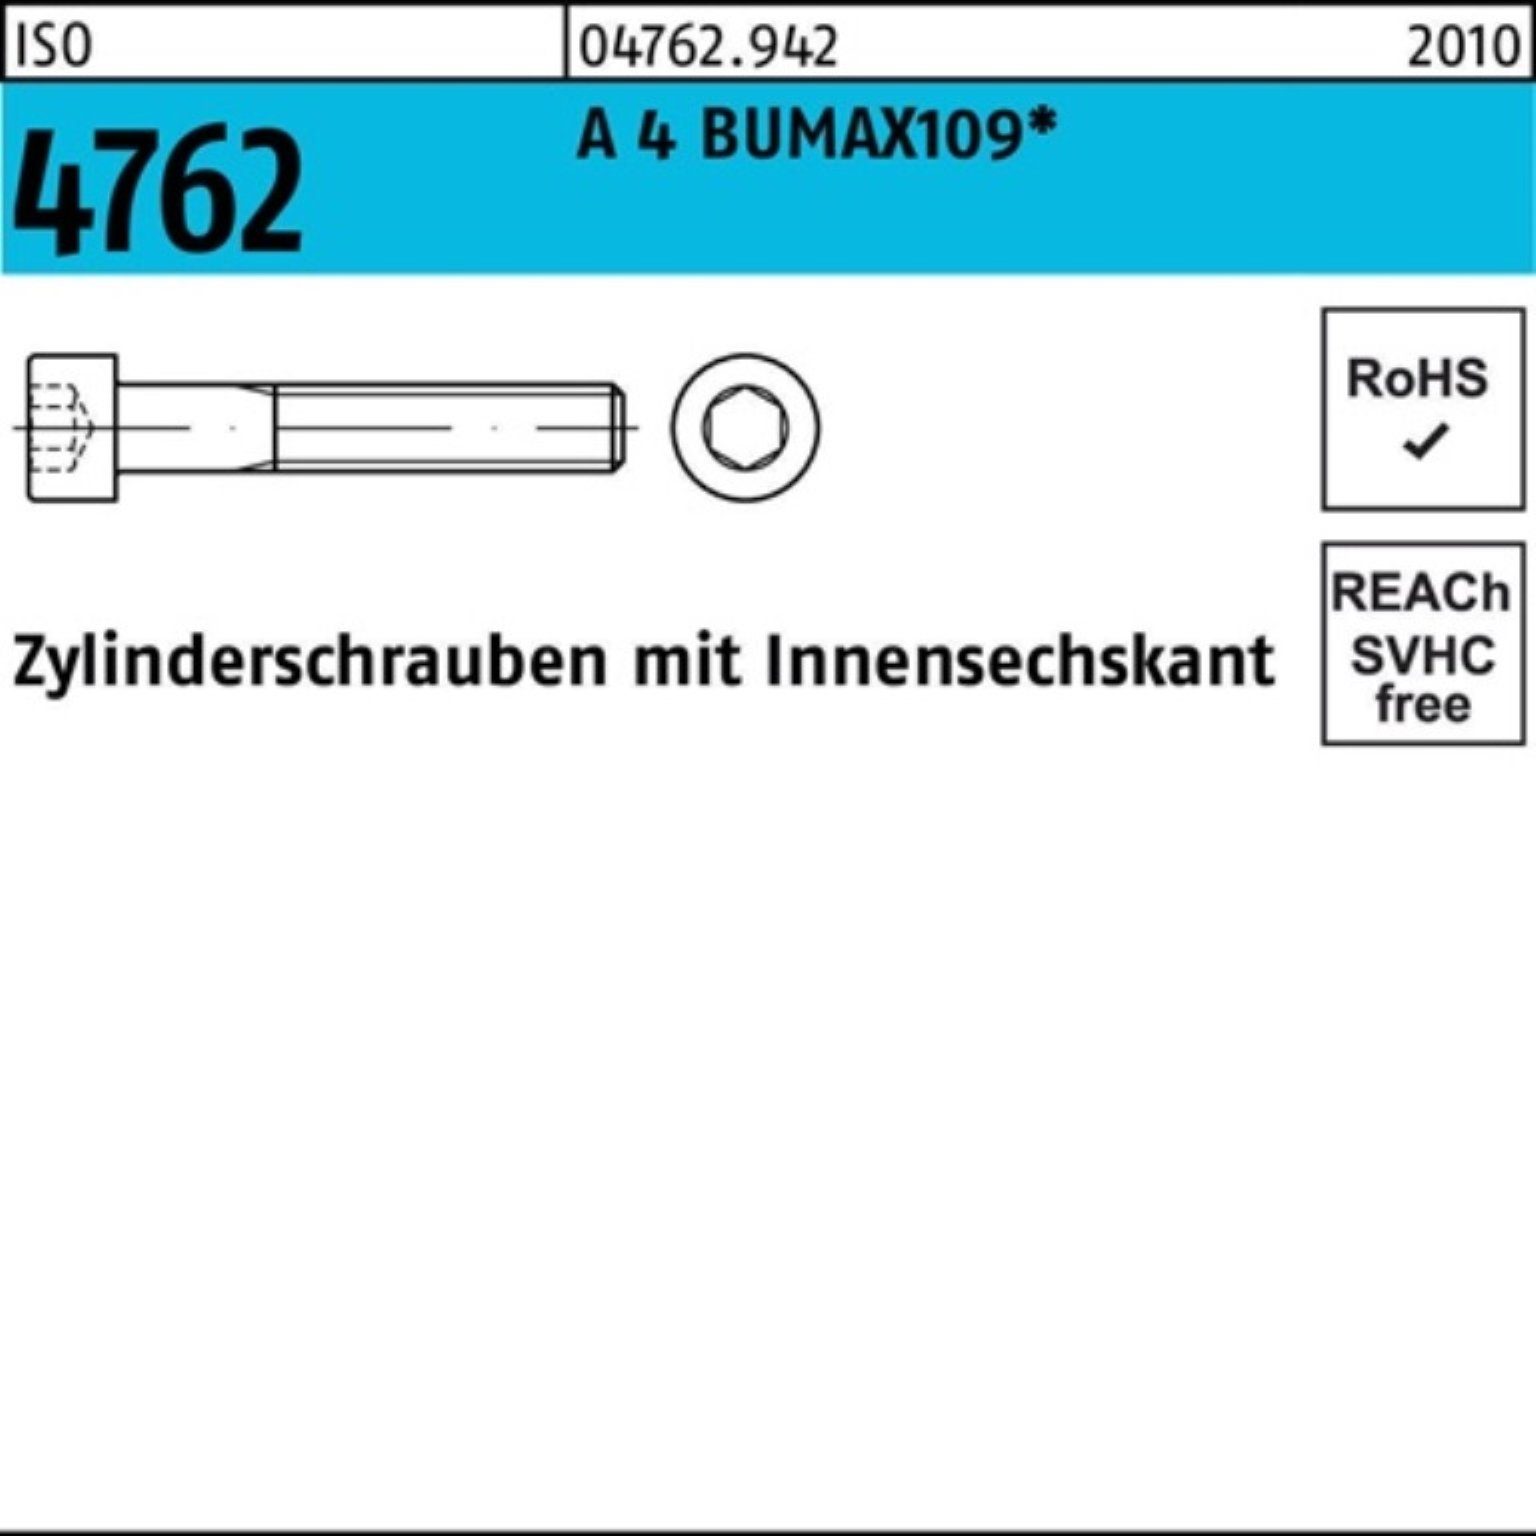 Bufab Zylinderschraube 100er Pack Zylinderschraube ISO 4762 Innen-6kt M12x 30 A 4 BUMAX109 25